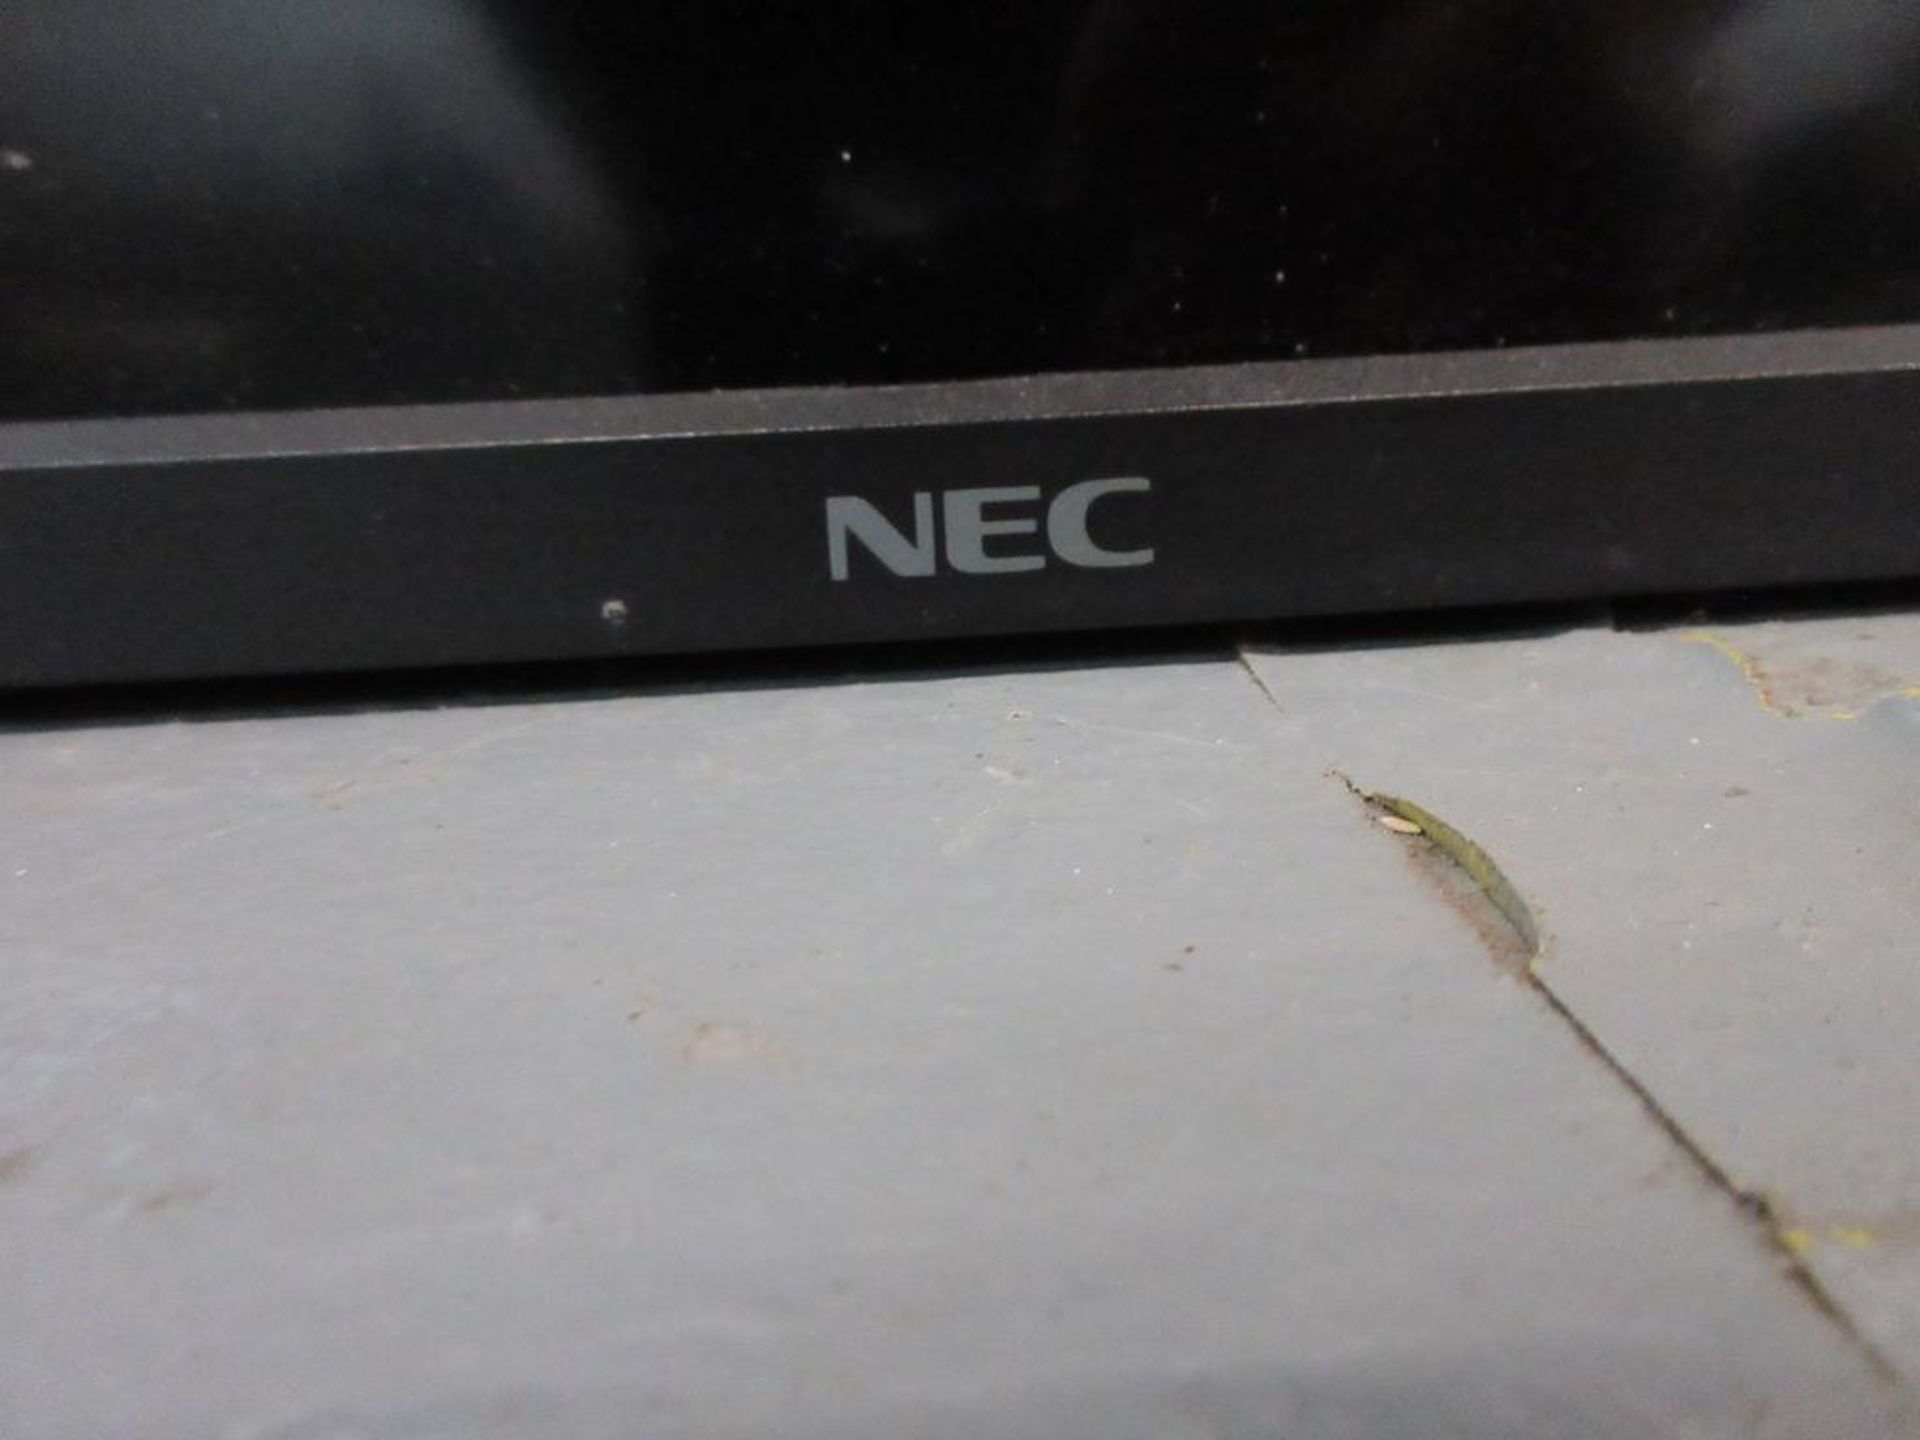 NEC multisync V463 46" LCD Monitor - Image 2 of 3